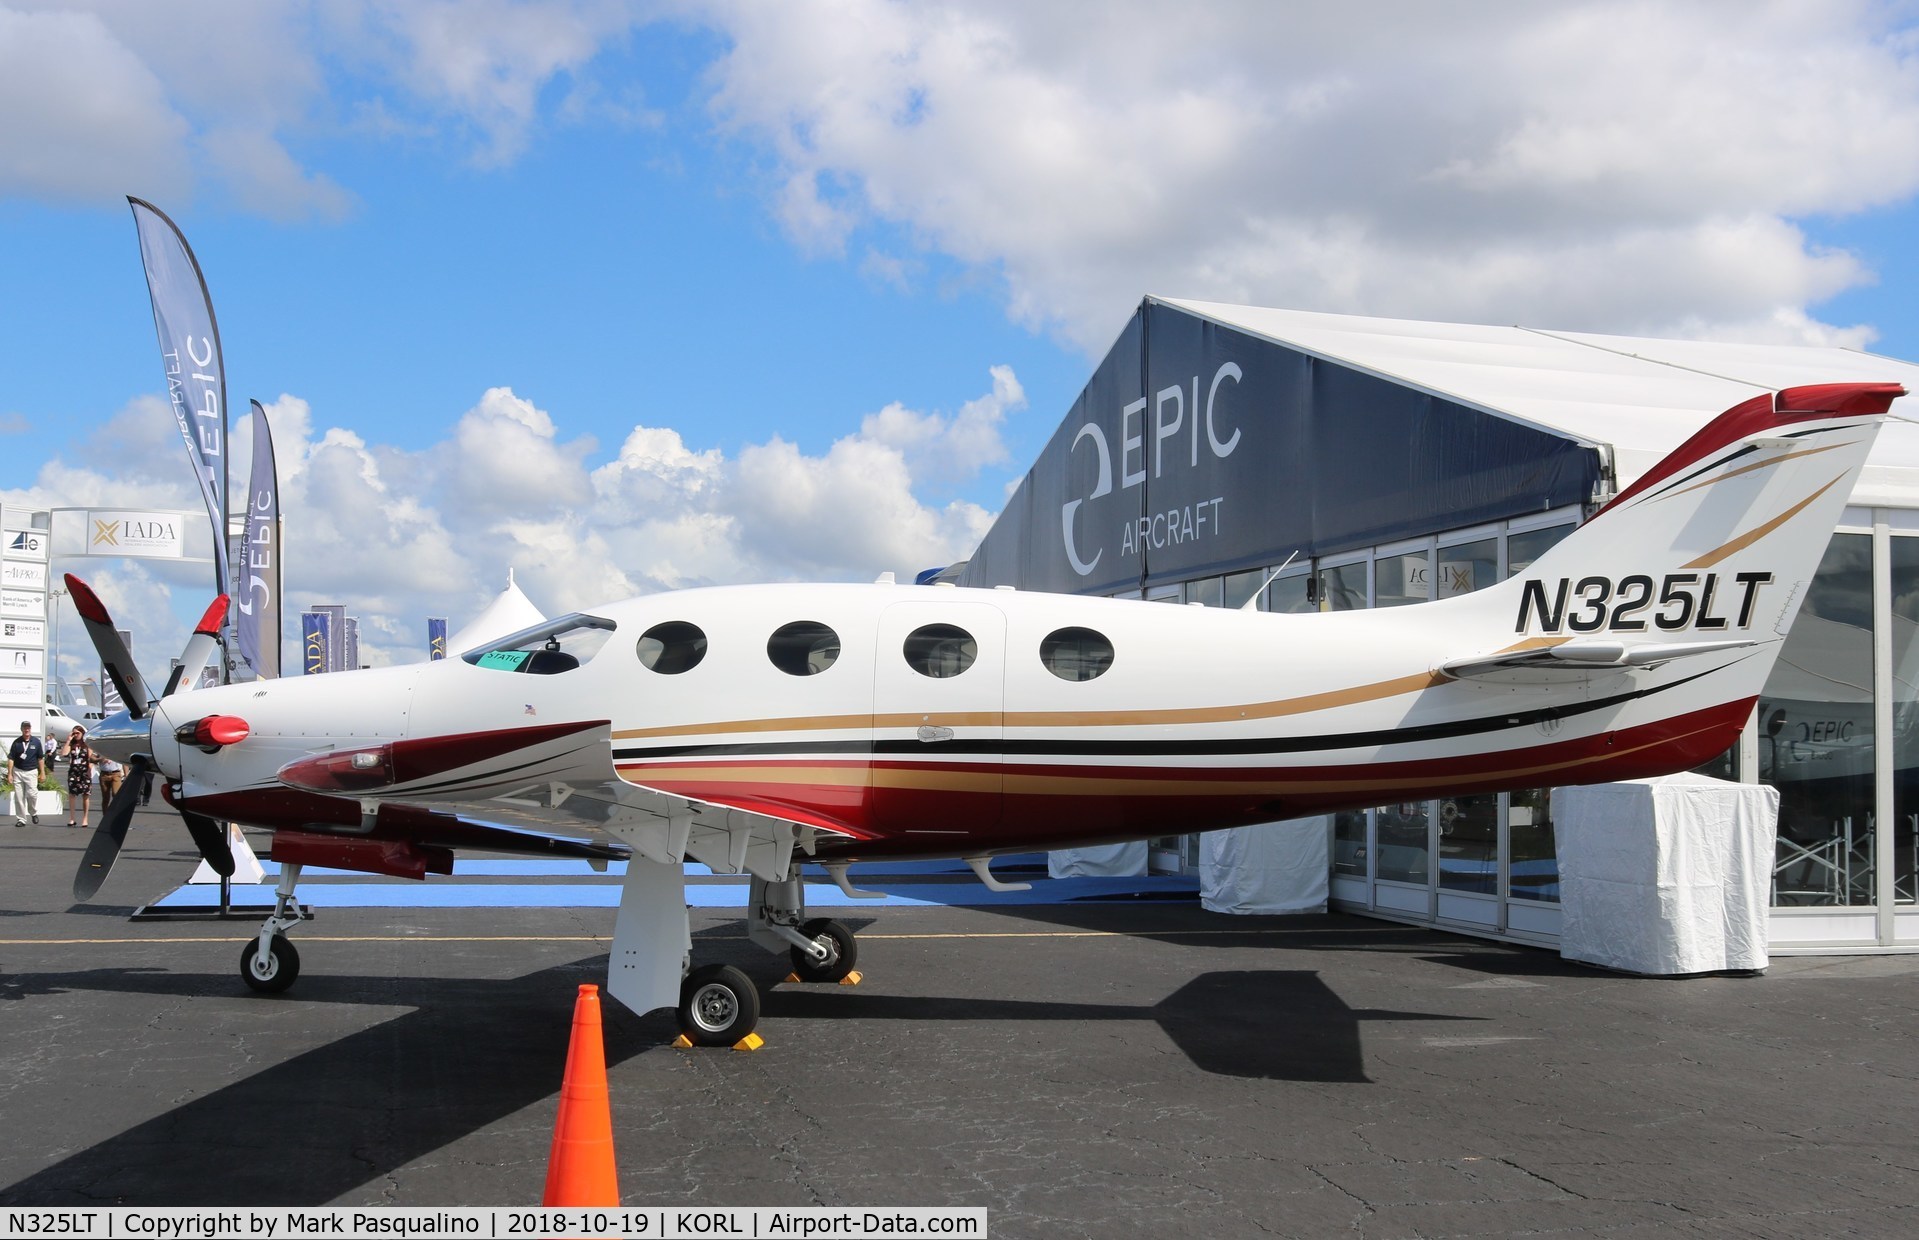 N325LT, 2014 Epic Aircraft LT C/N 046, Epic LT